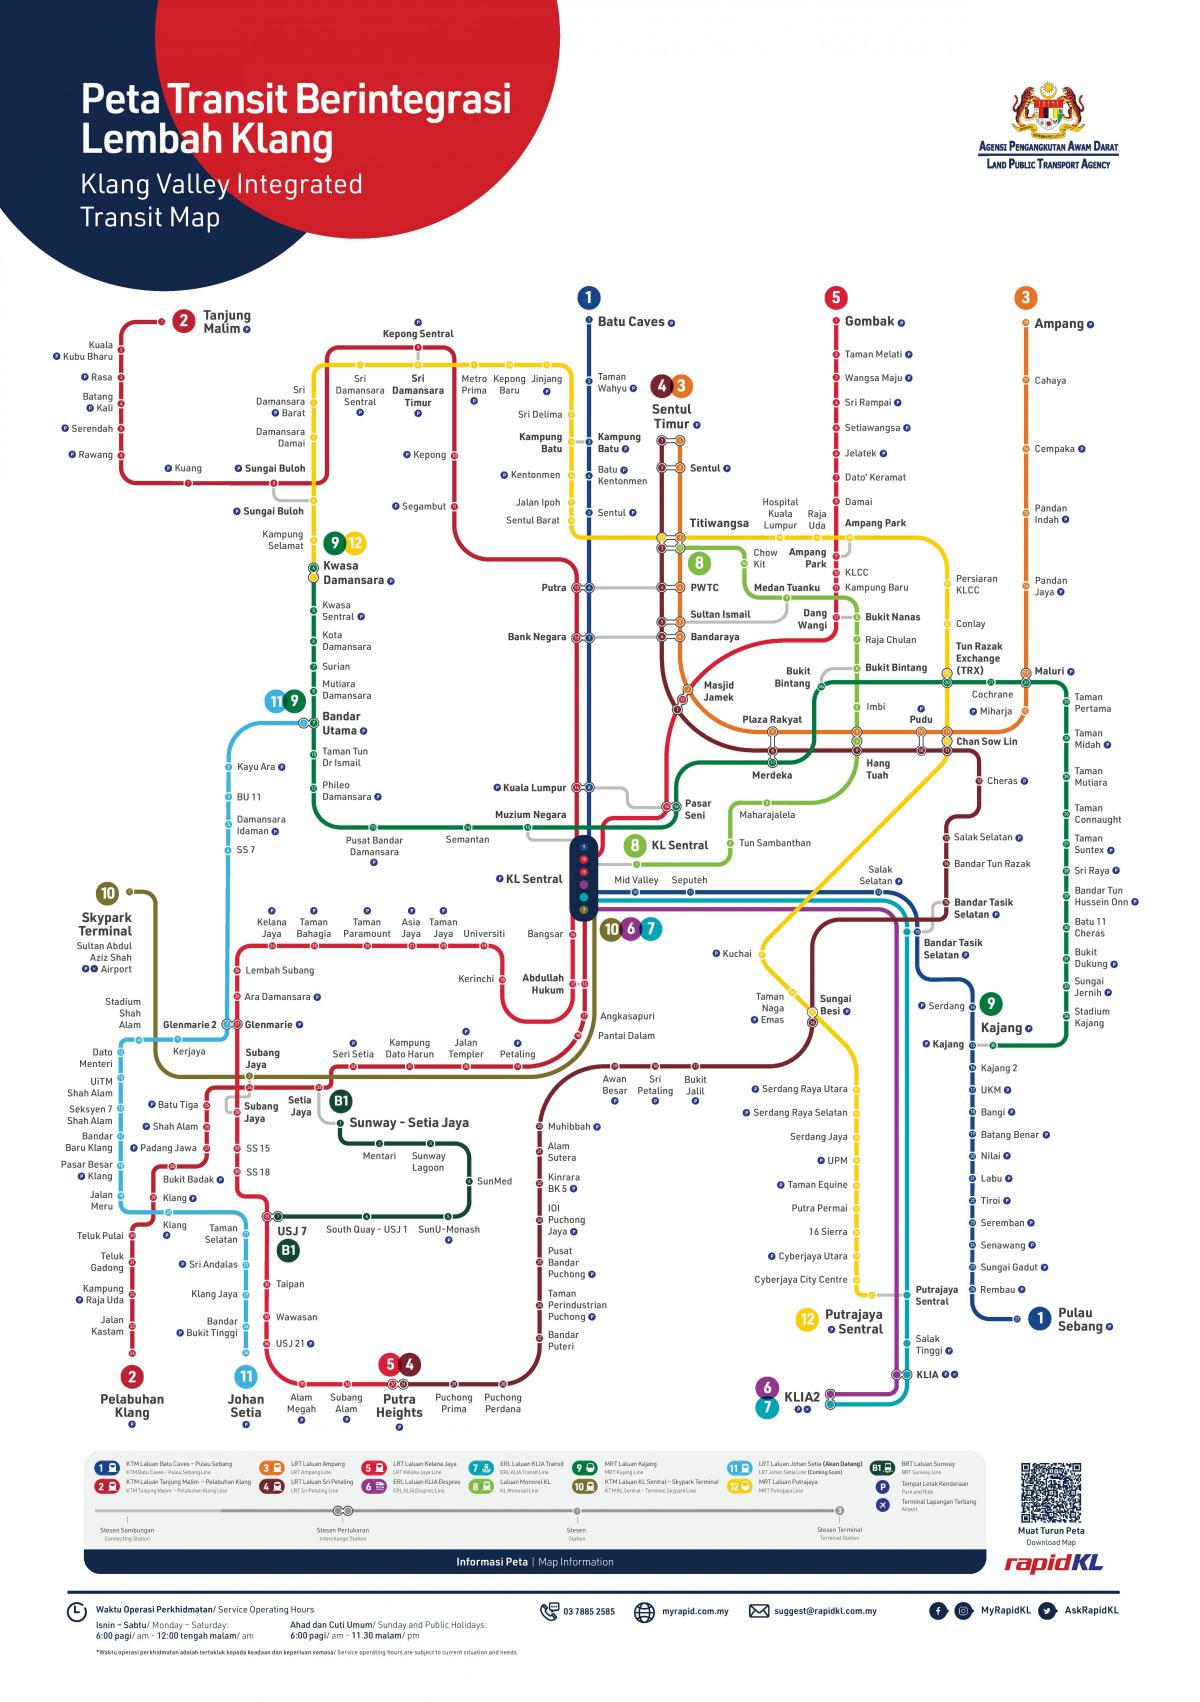 Plan du chemin de fer de Kuala Lumpur (KL)